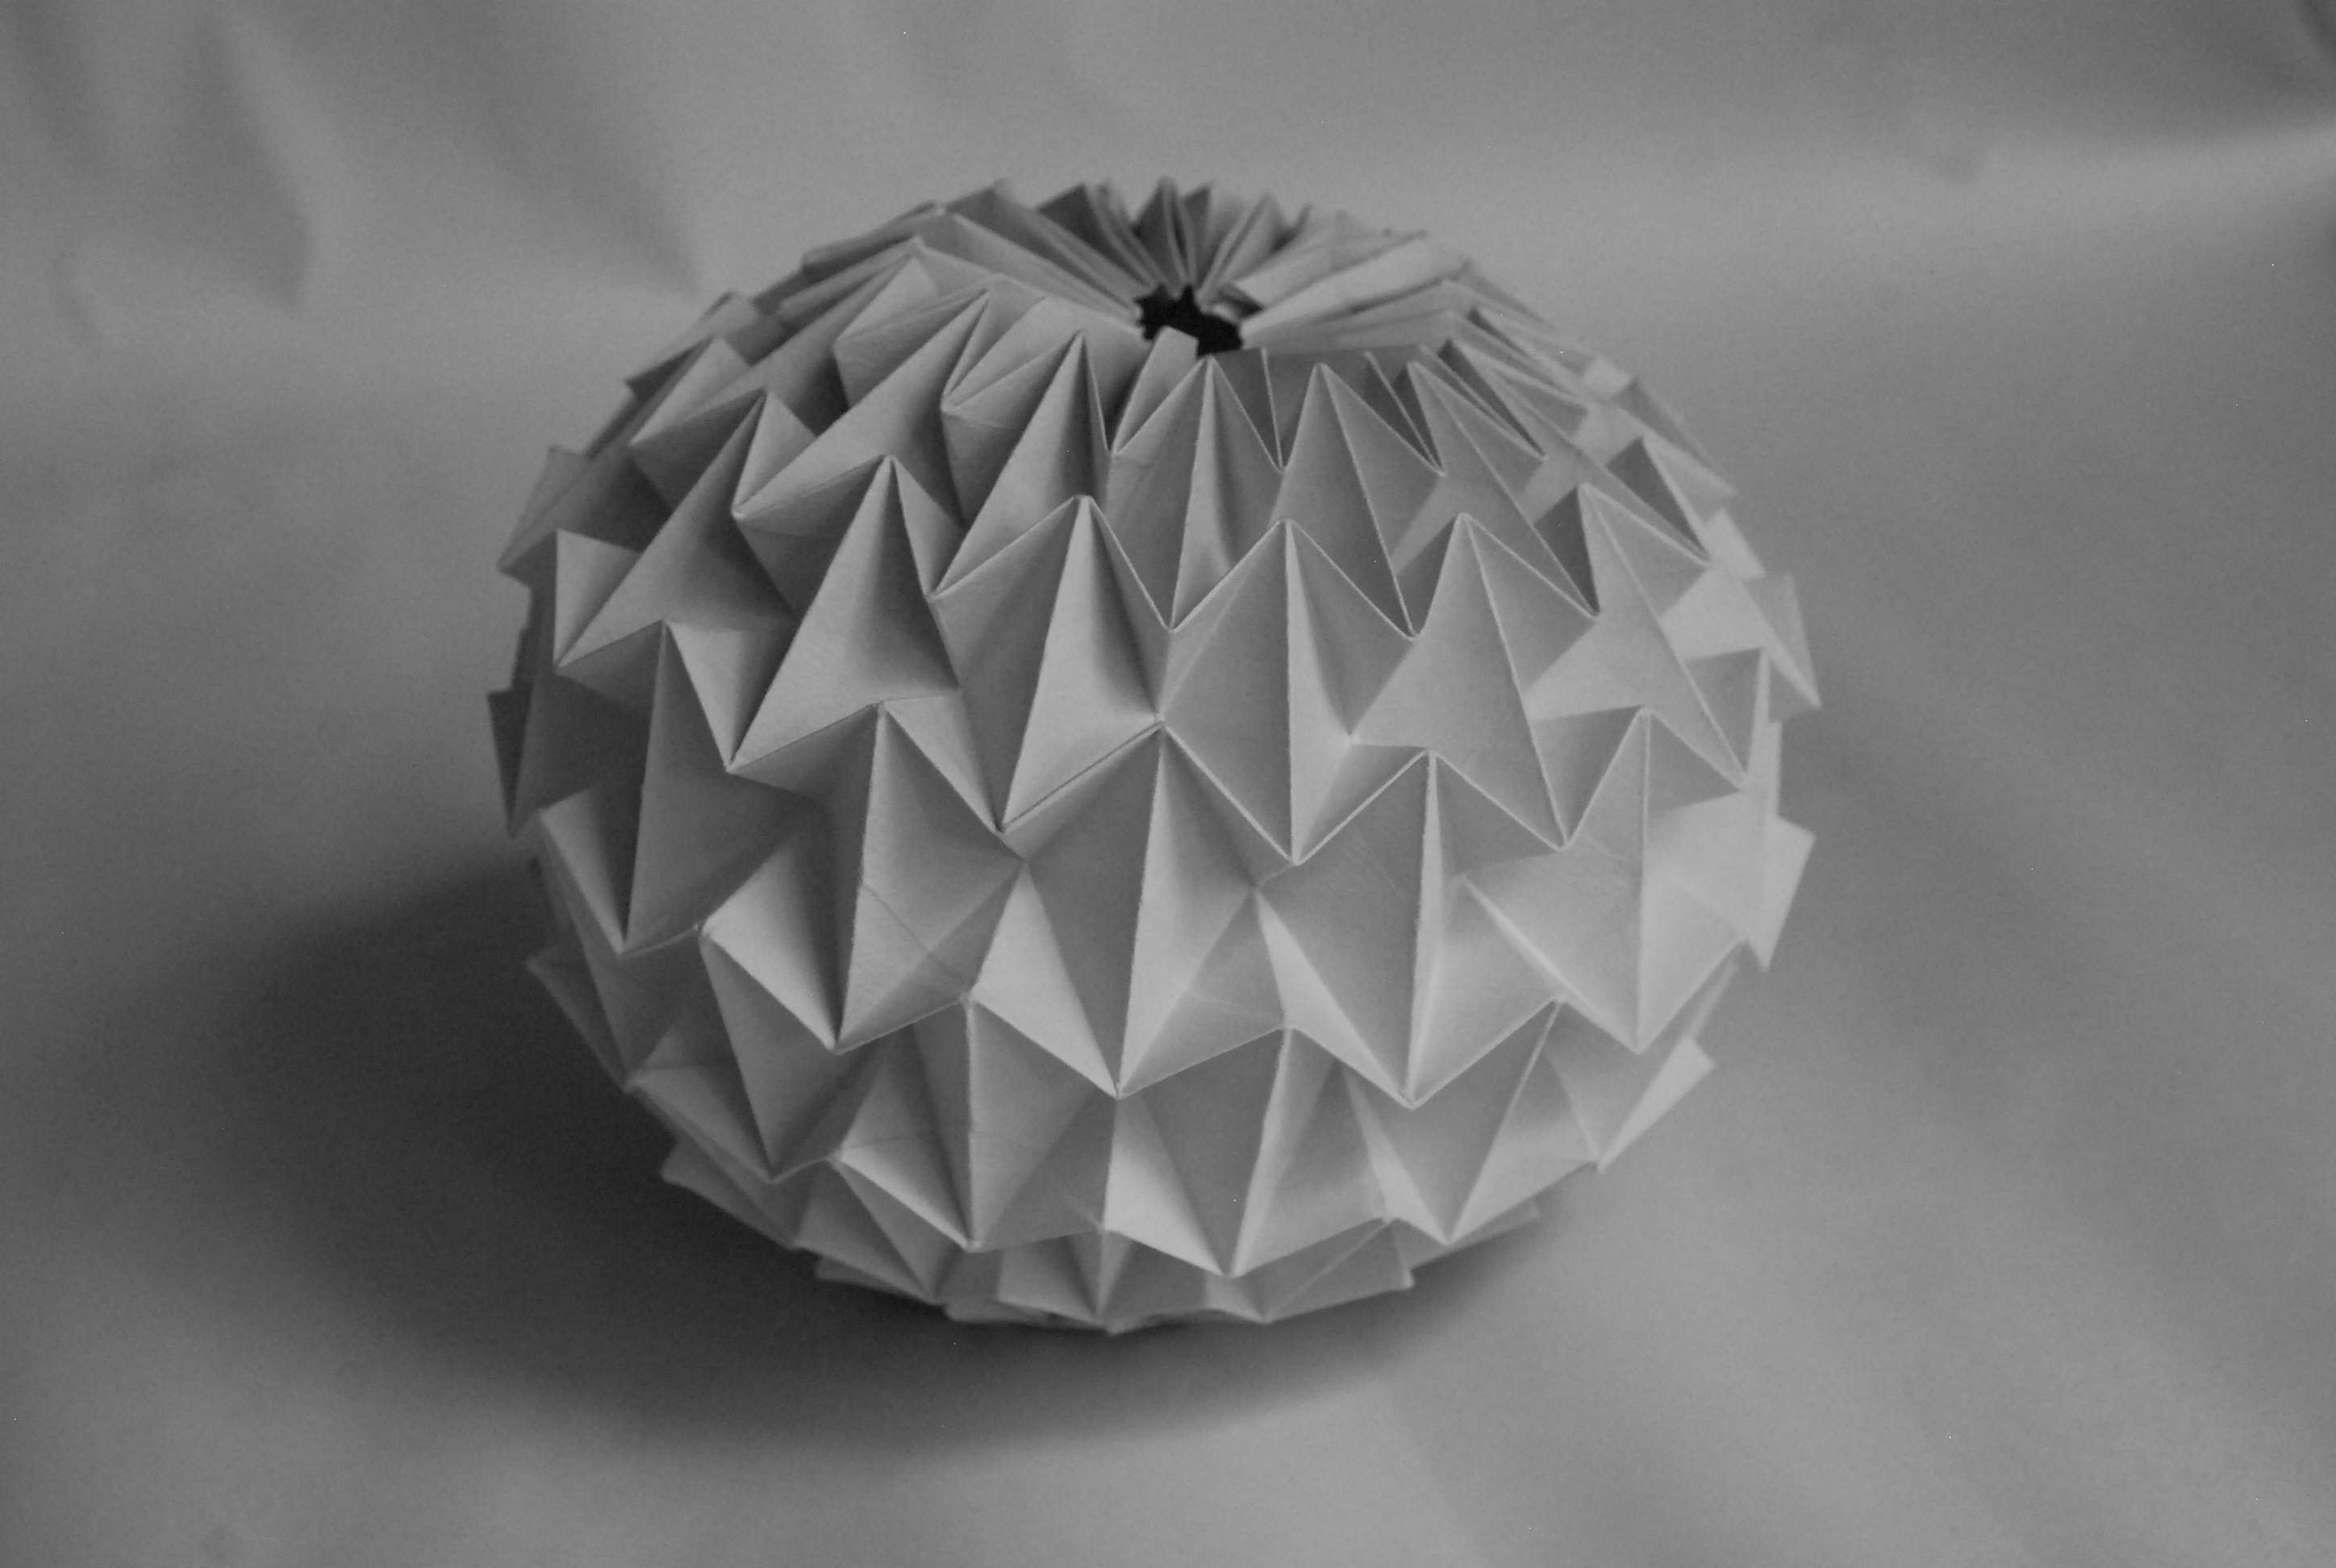 Origami Magic Ball Boon's Origami Blog